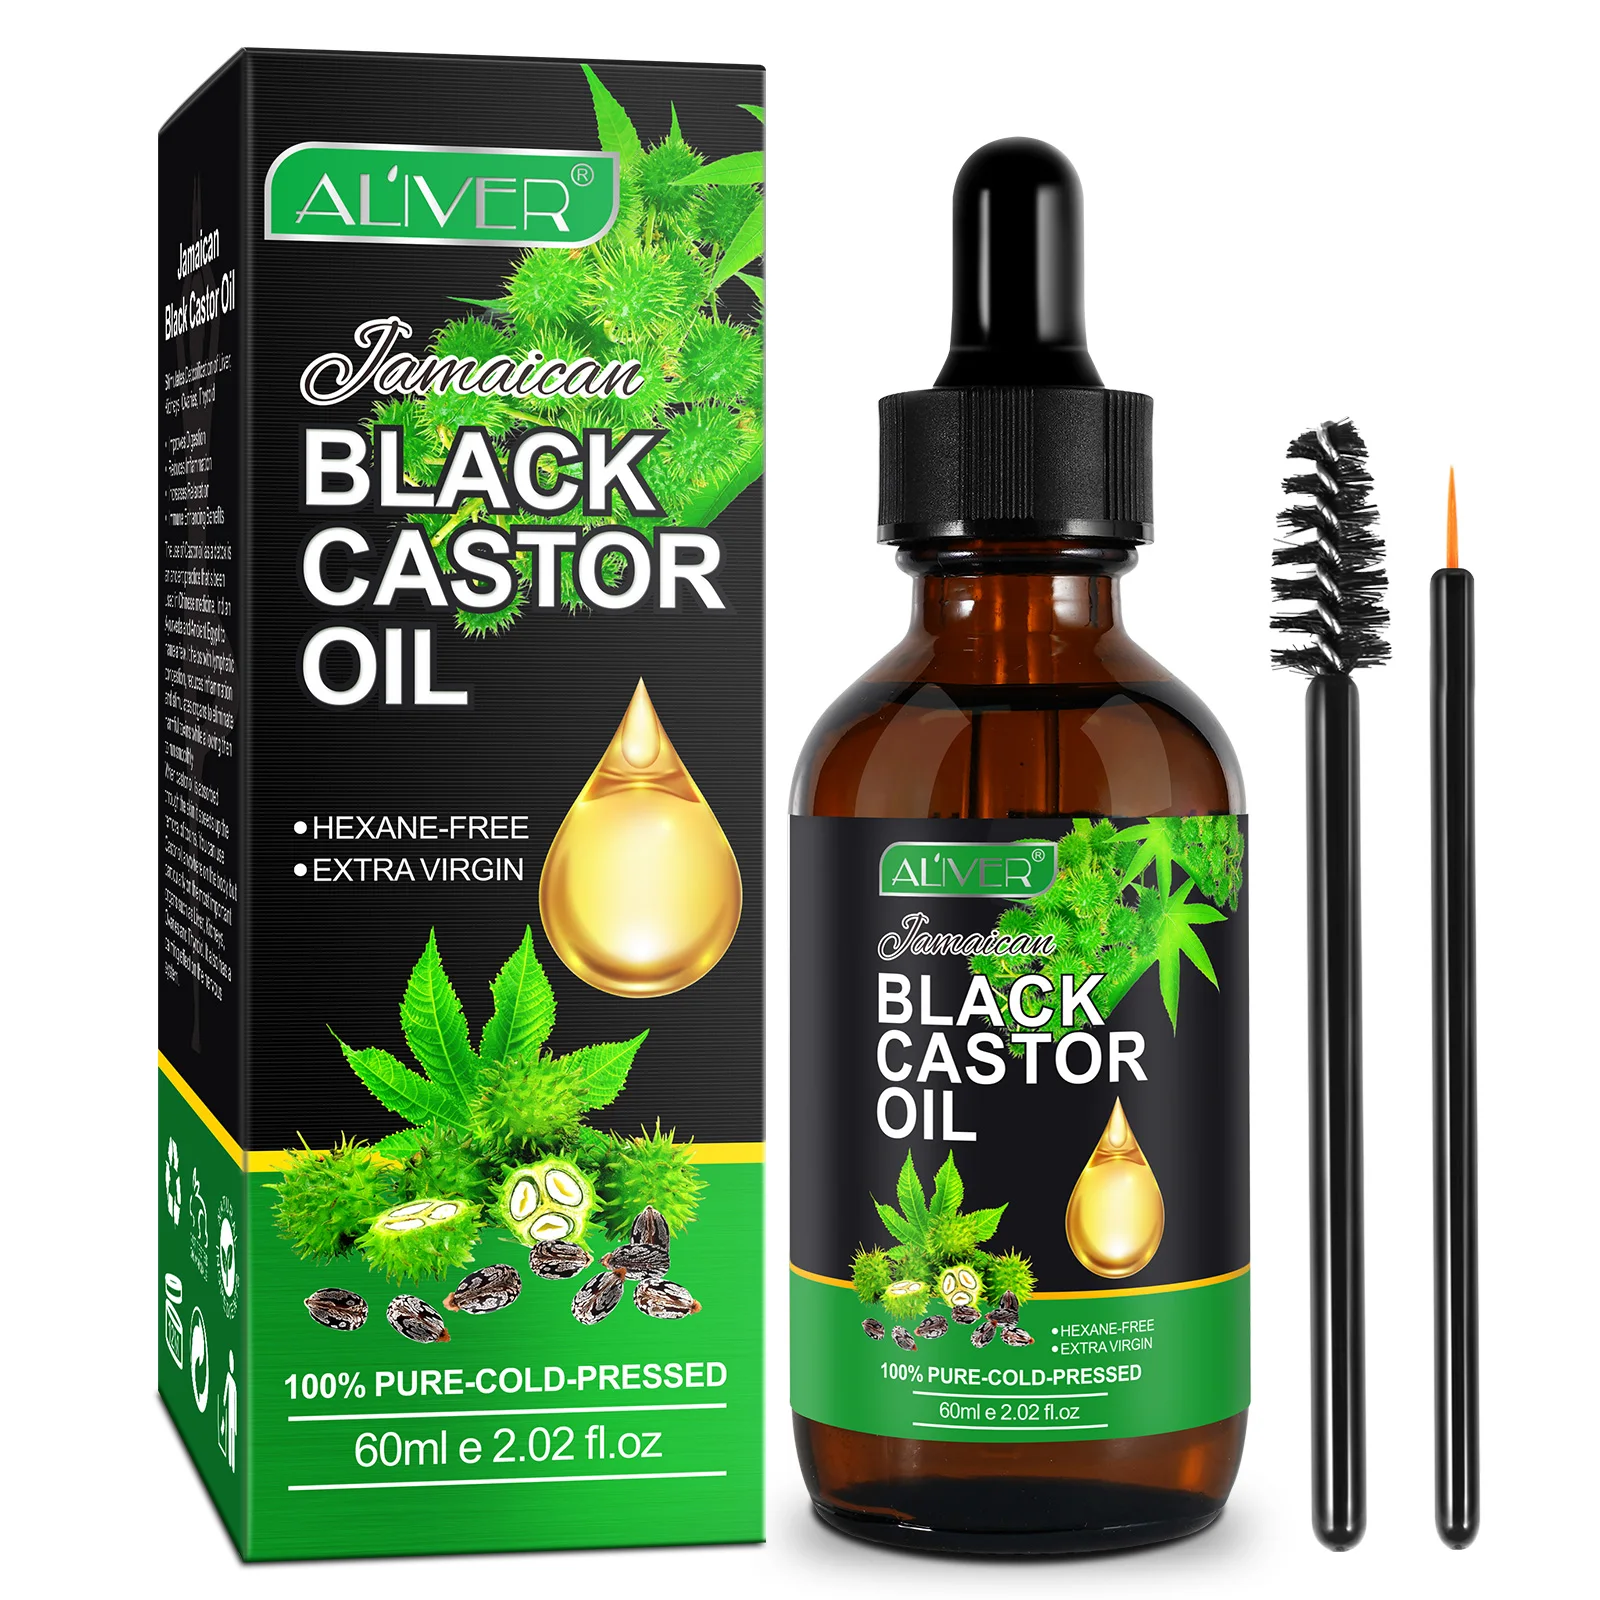 

ALIVER Hot Sale Jamaican Black Castor Oil Private Label 60ml Natural 100% Pure Cold Pressed Castor Oil Body Massage Oils